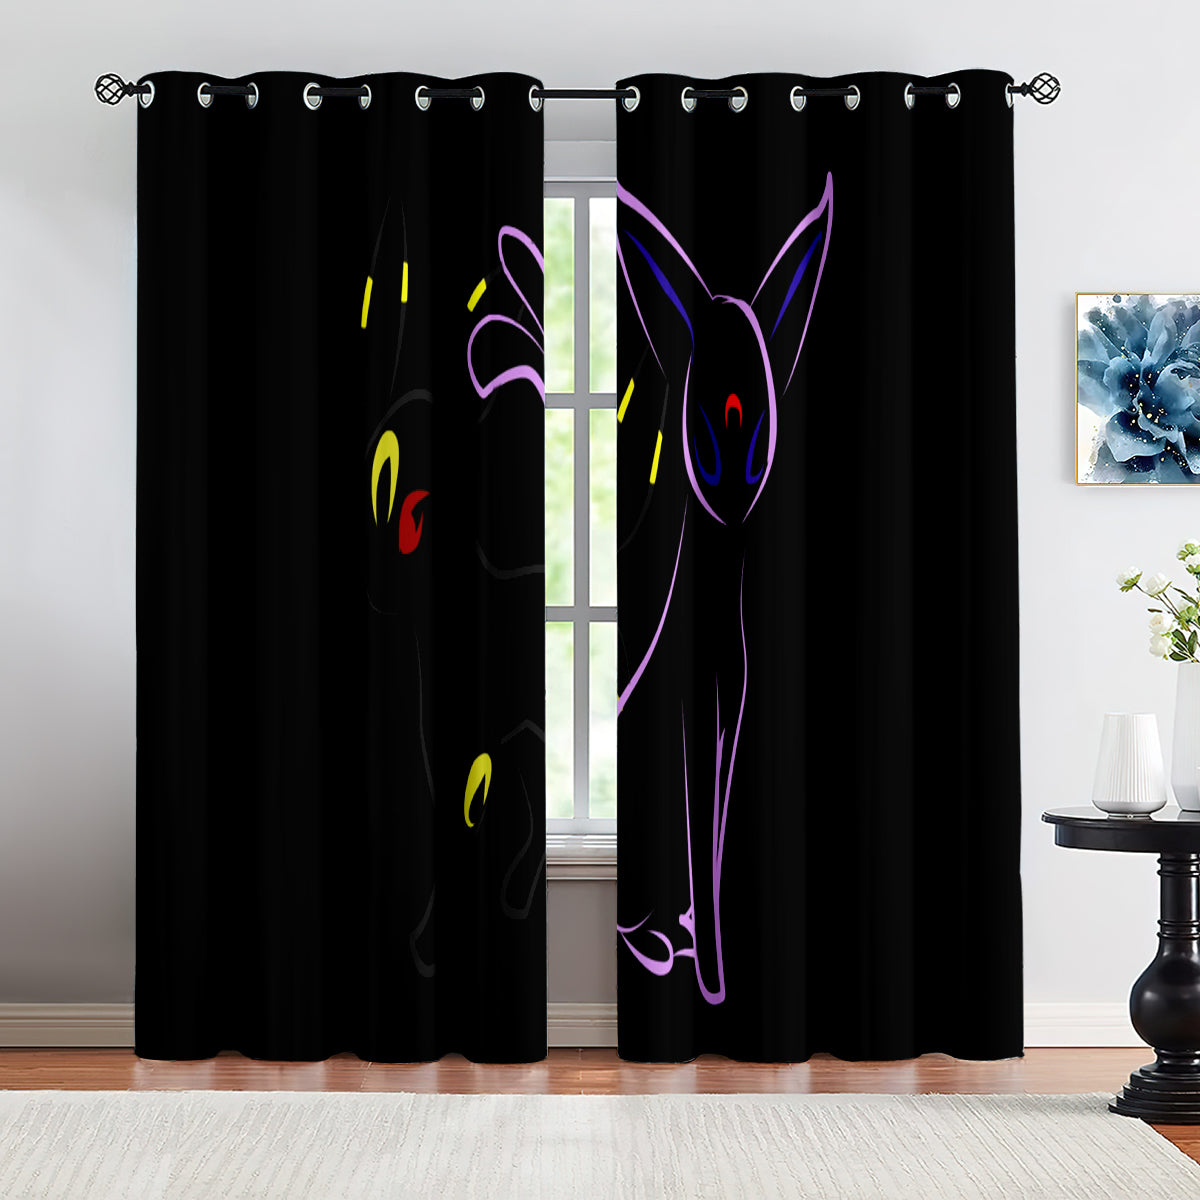 Pokemon Umbreon Blackout Curtains Drapes for Window Treatment Set